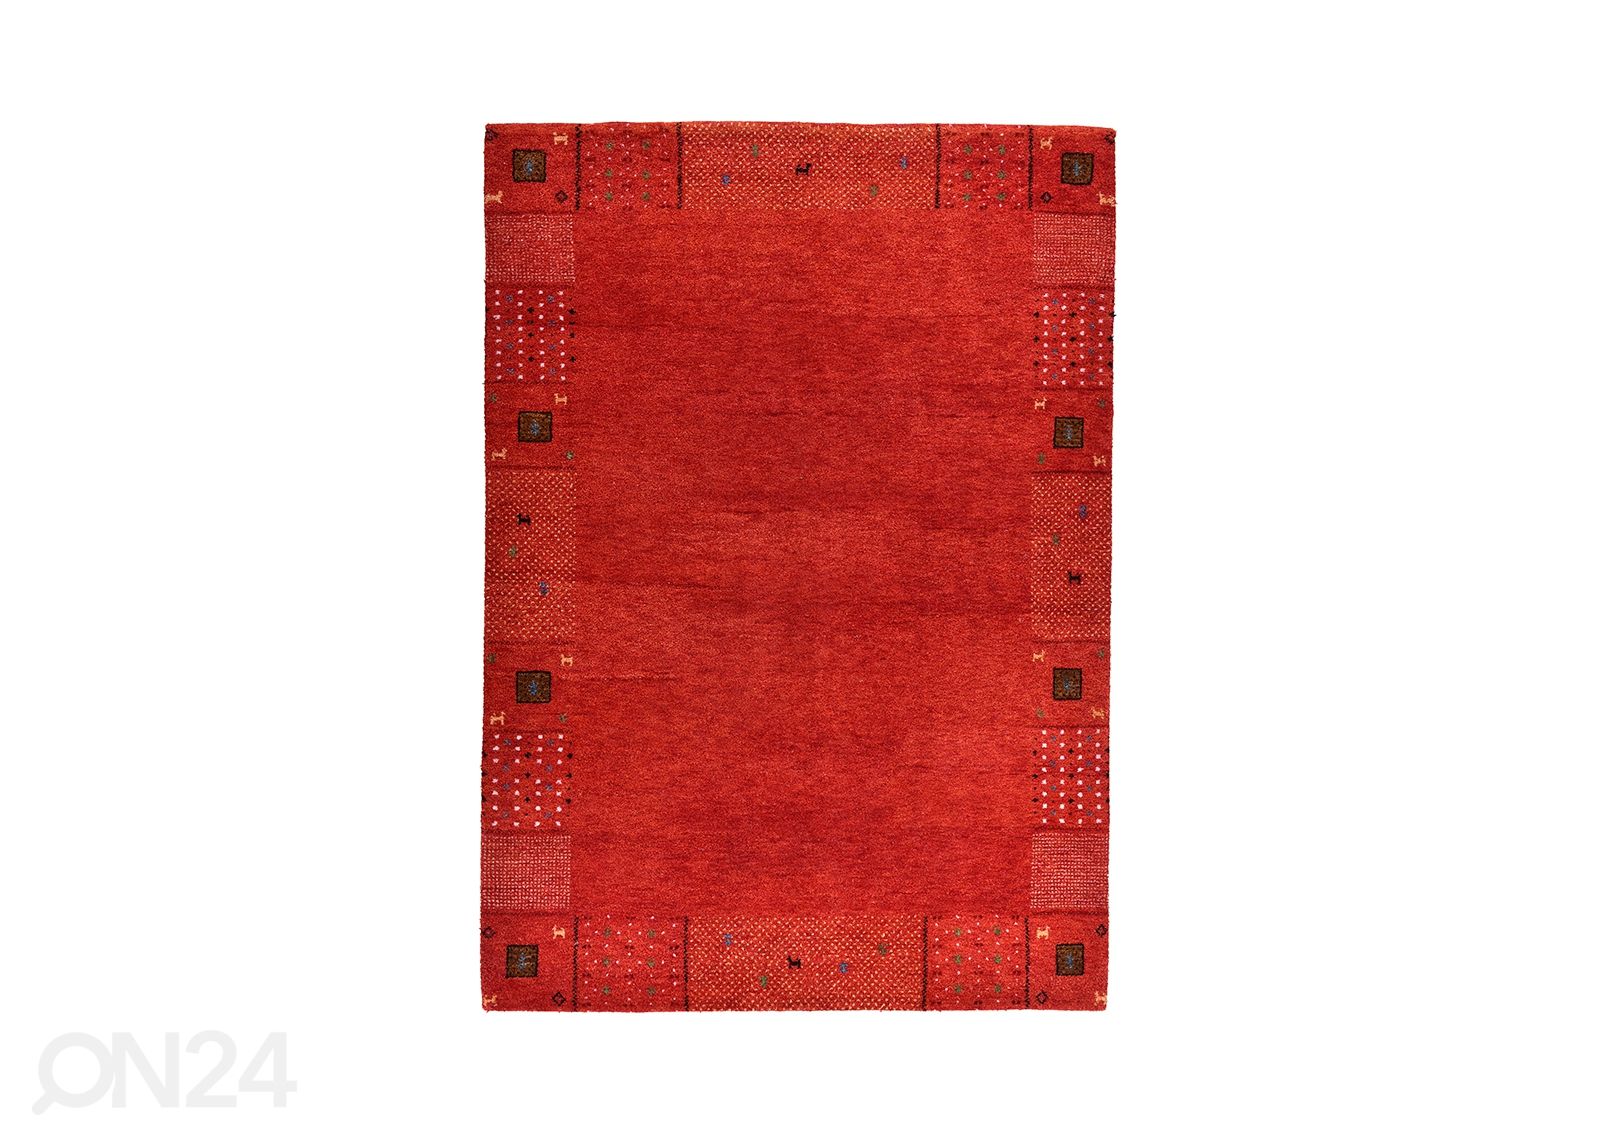 Matto Denver, 70x140 cm punainen kuvasuurennos